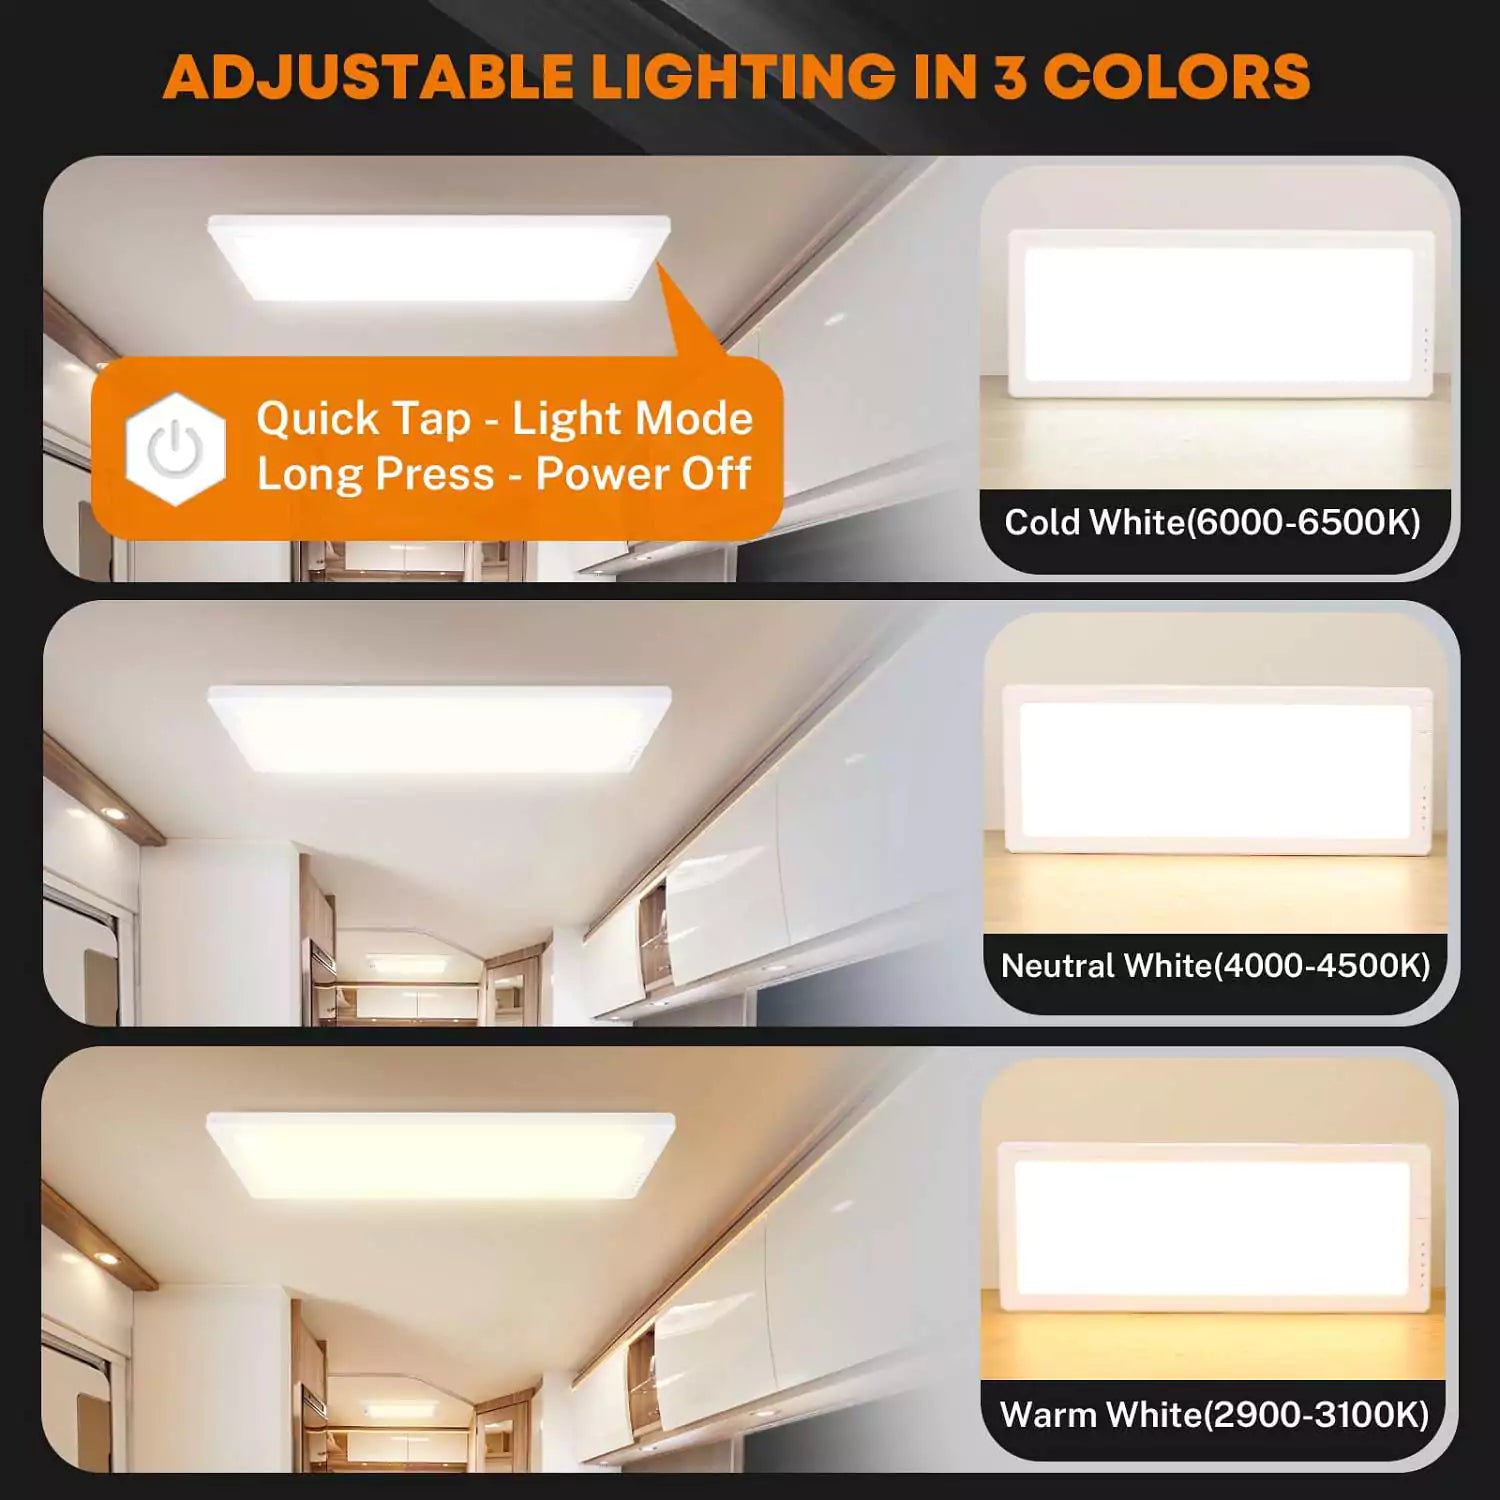 RV light interior adjustable lighting in 3 colors